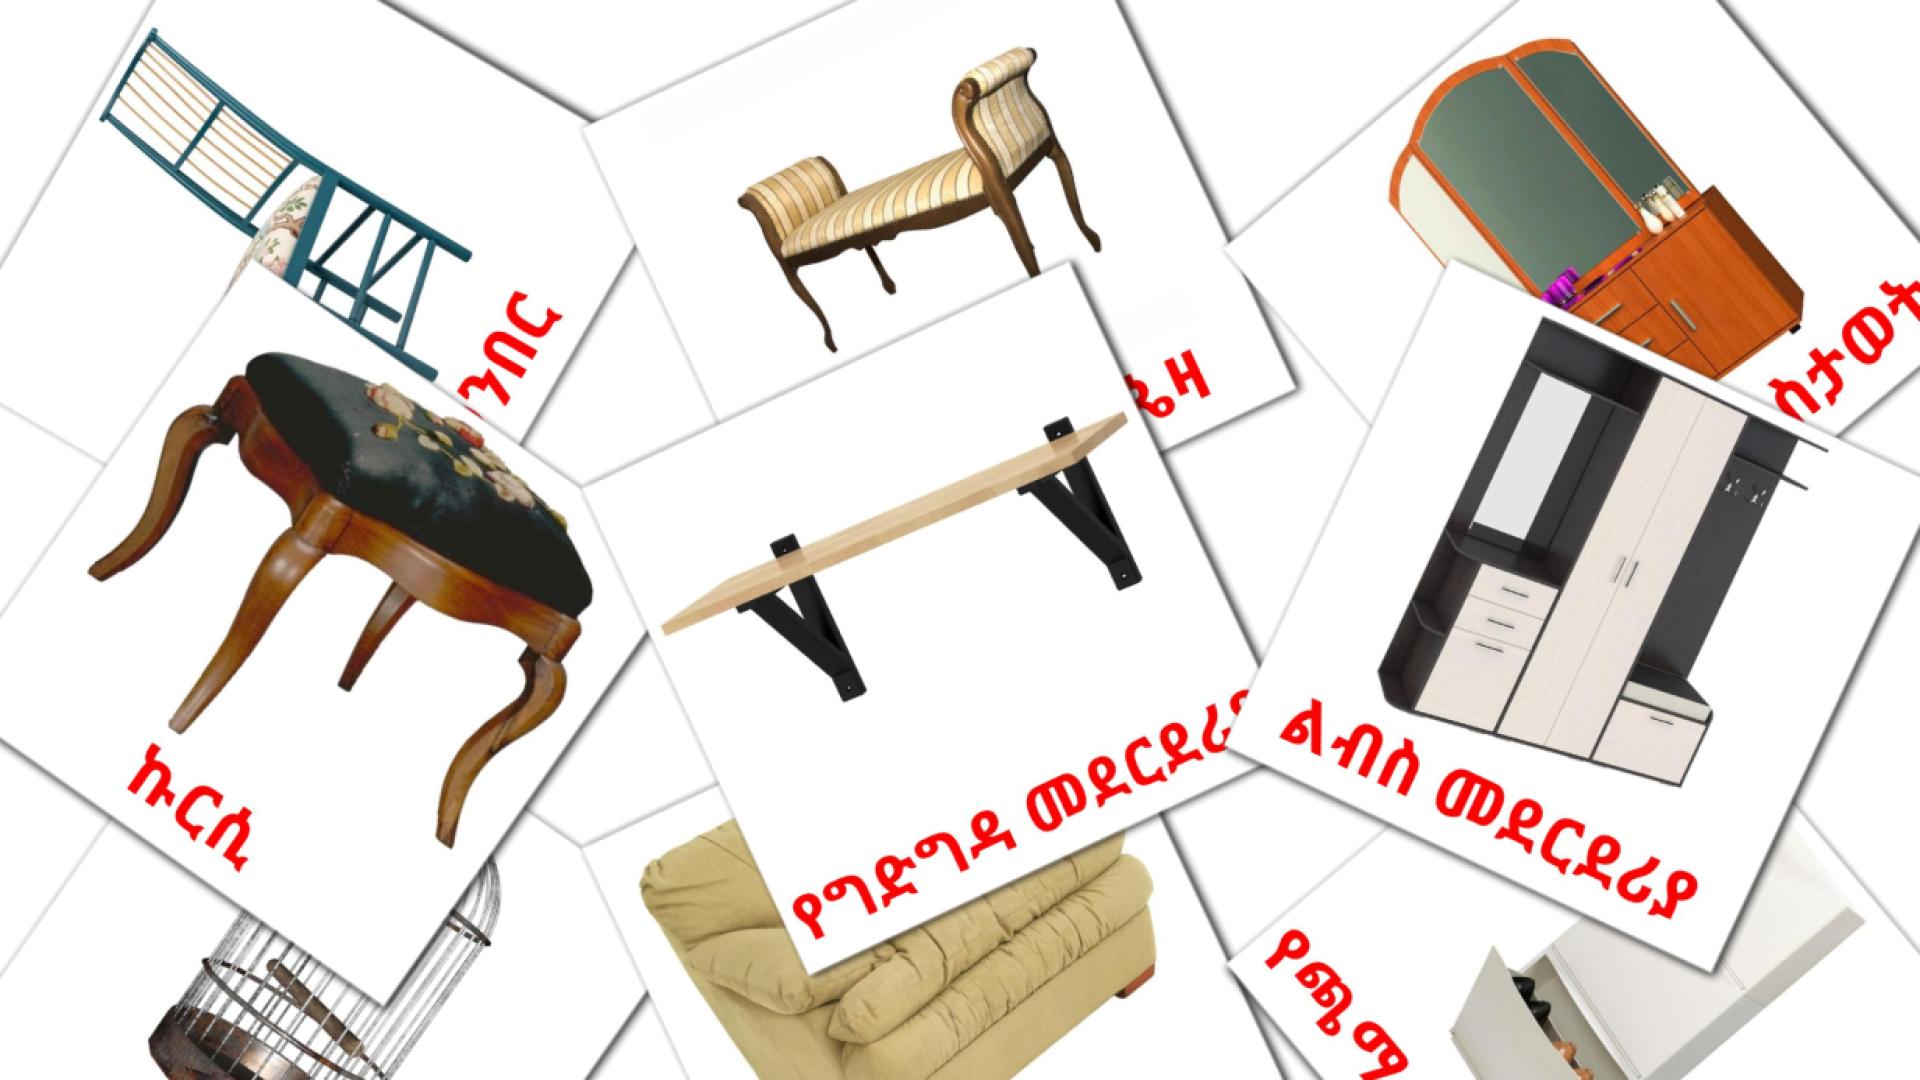 Furniture - amharic vocabulary cards